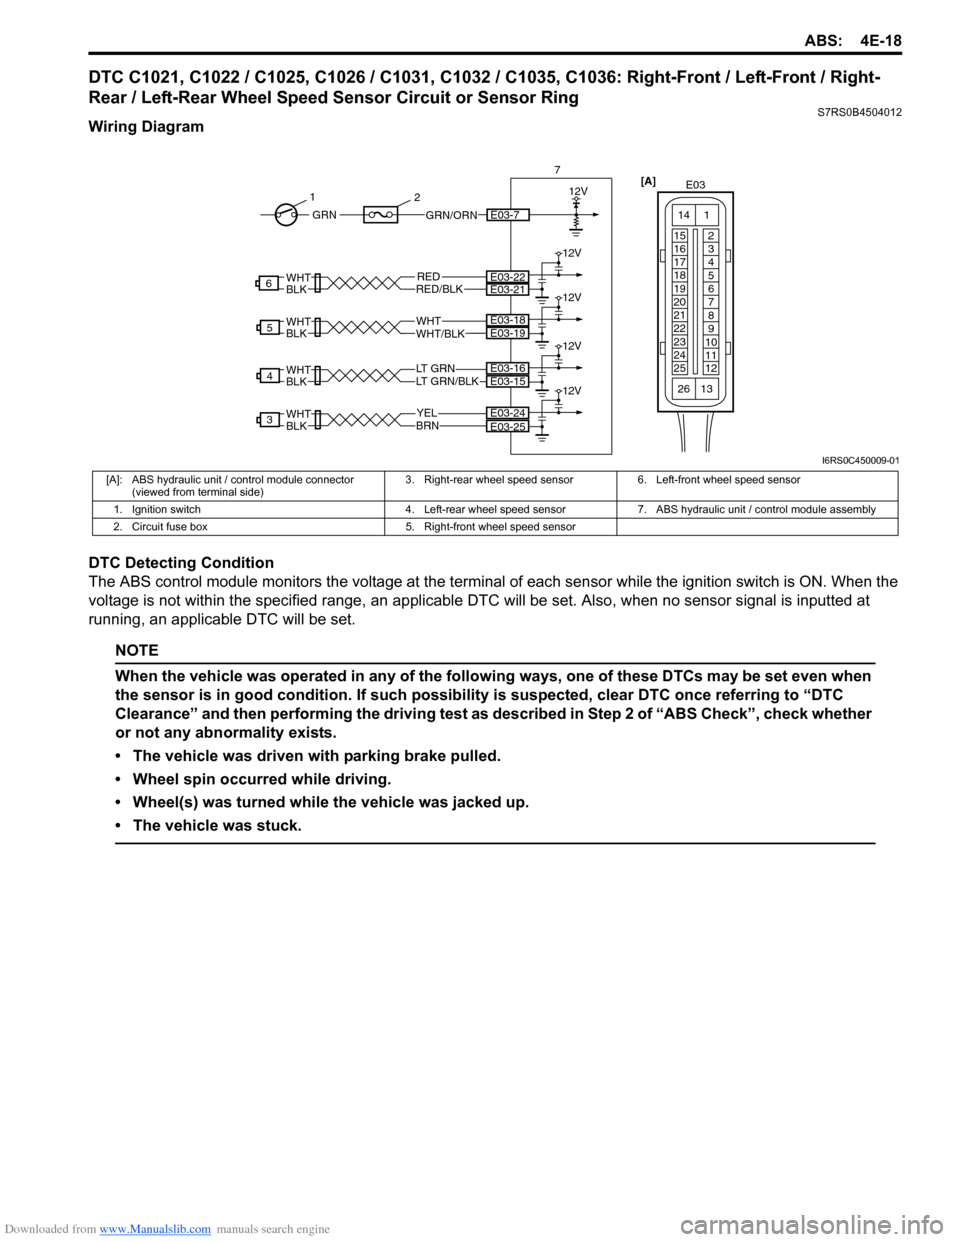 SUZUKI SWIFT 2007 2.G Service Service Manual Downloaded from www.Manualslib.com manuals search engine ABS: 4E-18
DTC C1021, C1022 / C1025, C1026 / C1031, C1032 / C1035, C1036: Right-Front / Left-Front / Right-
Rear / Left-Rear Wheel Speed Sensor